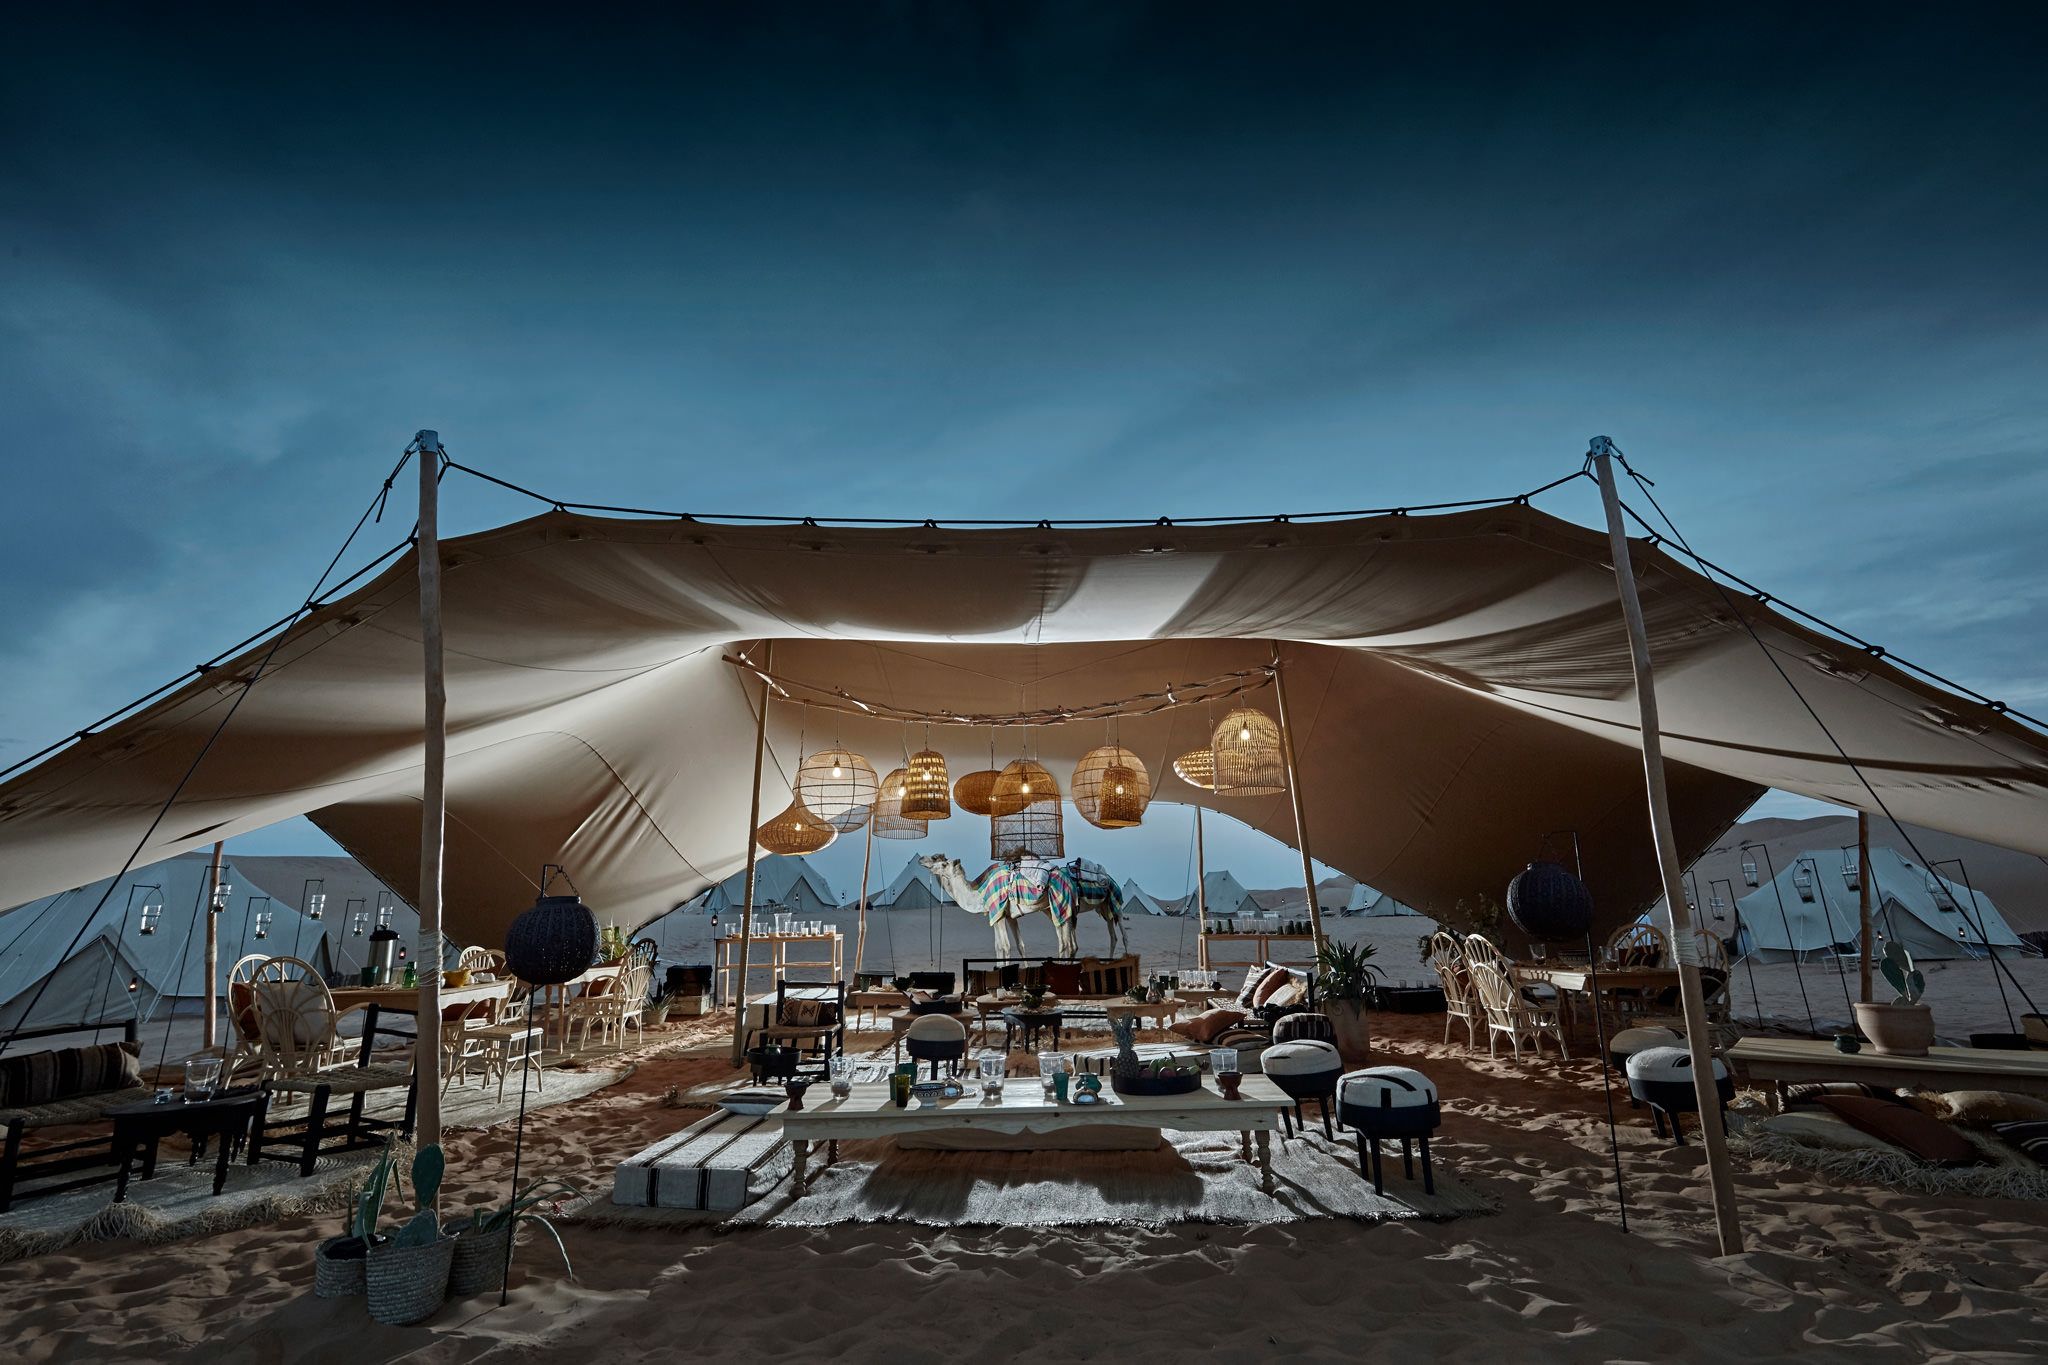 Oman Desert Camp